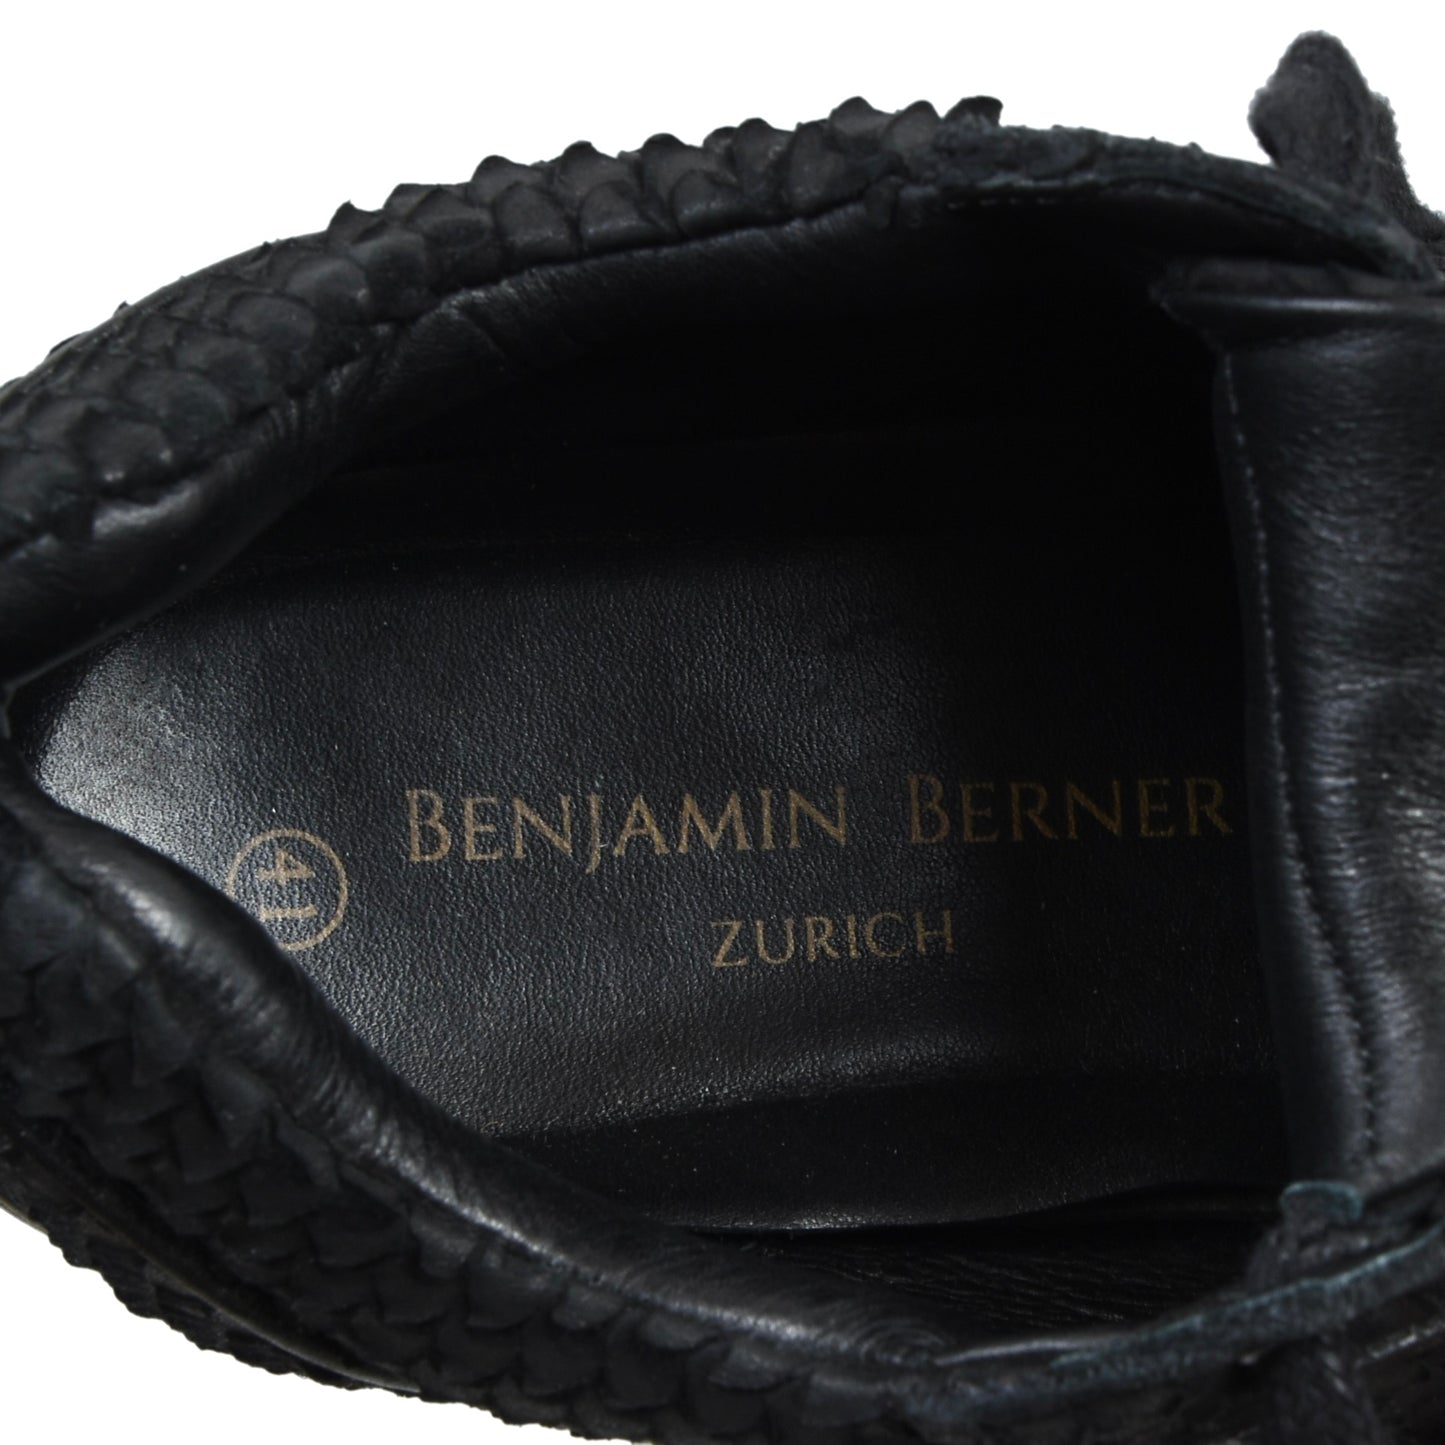 Benjamin Berner Zürich Sneakers Größe 41 - Schwarz